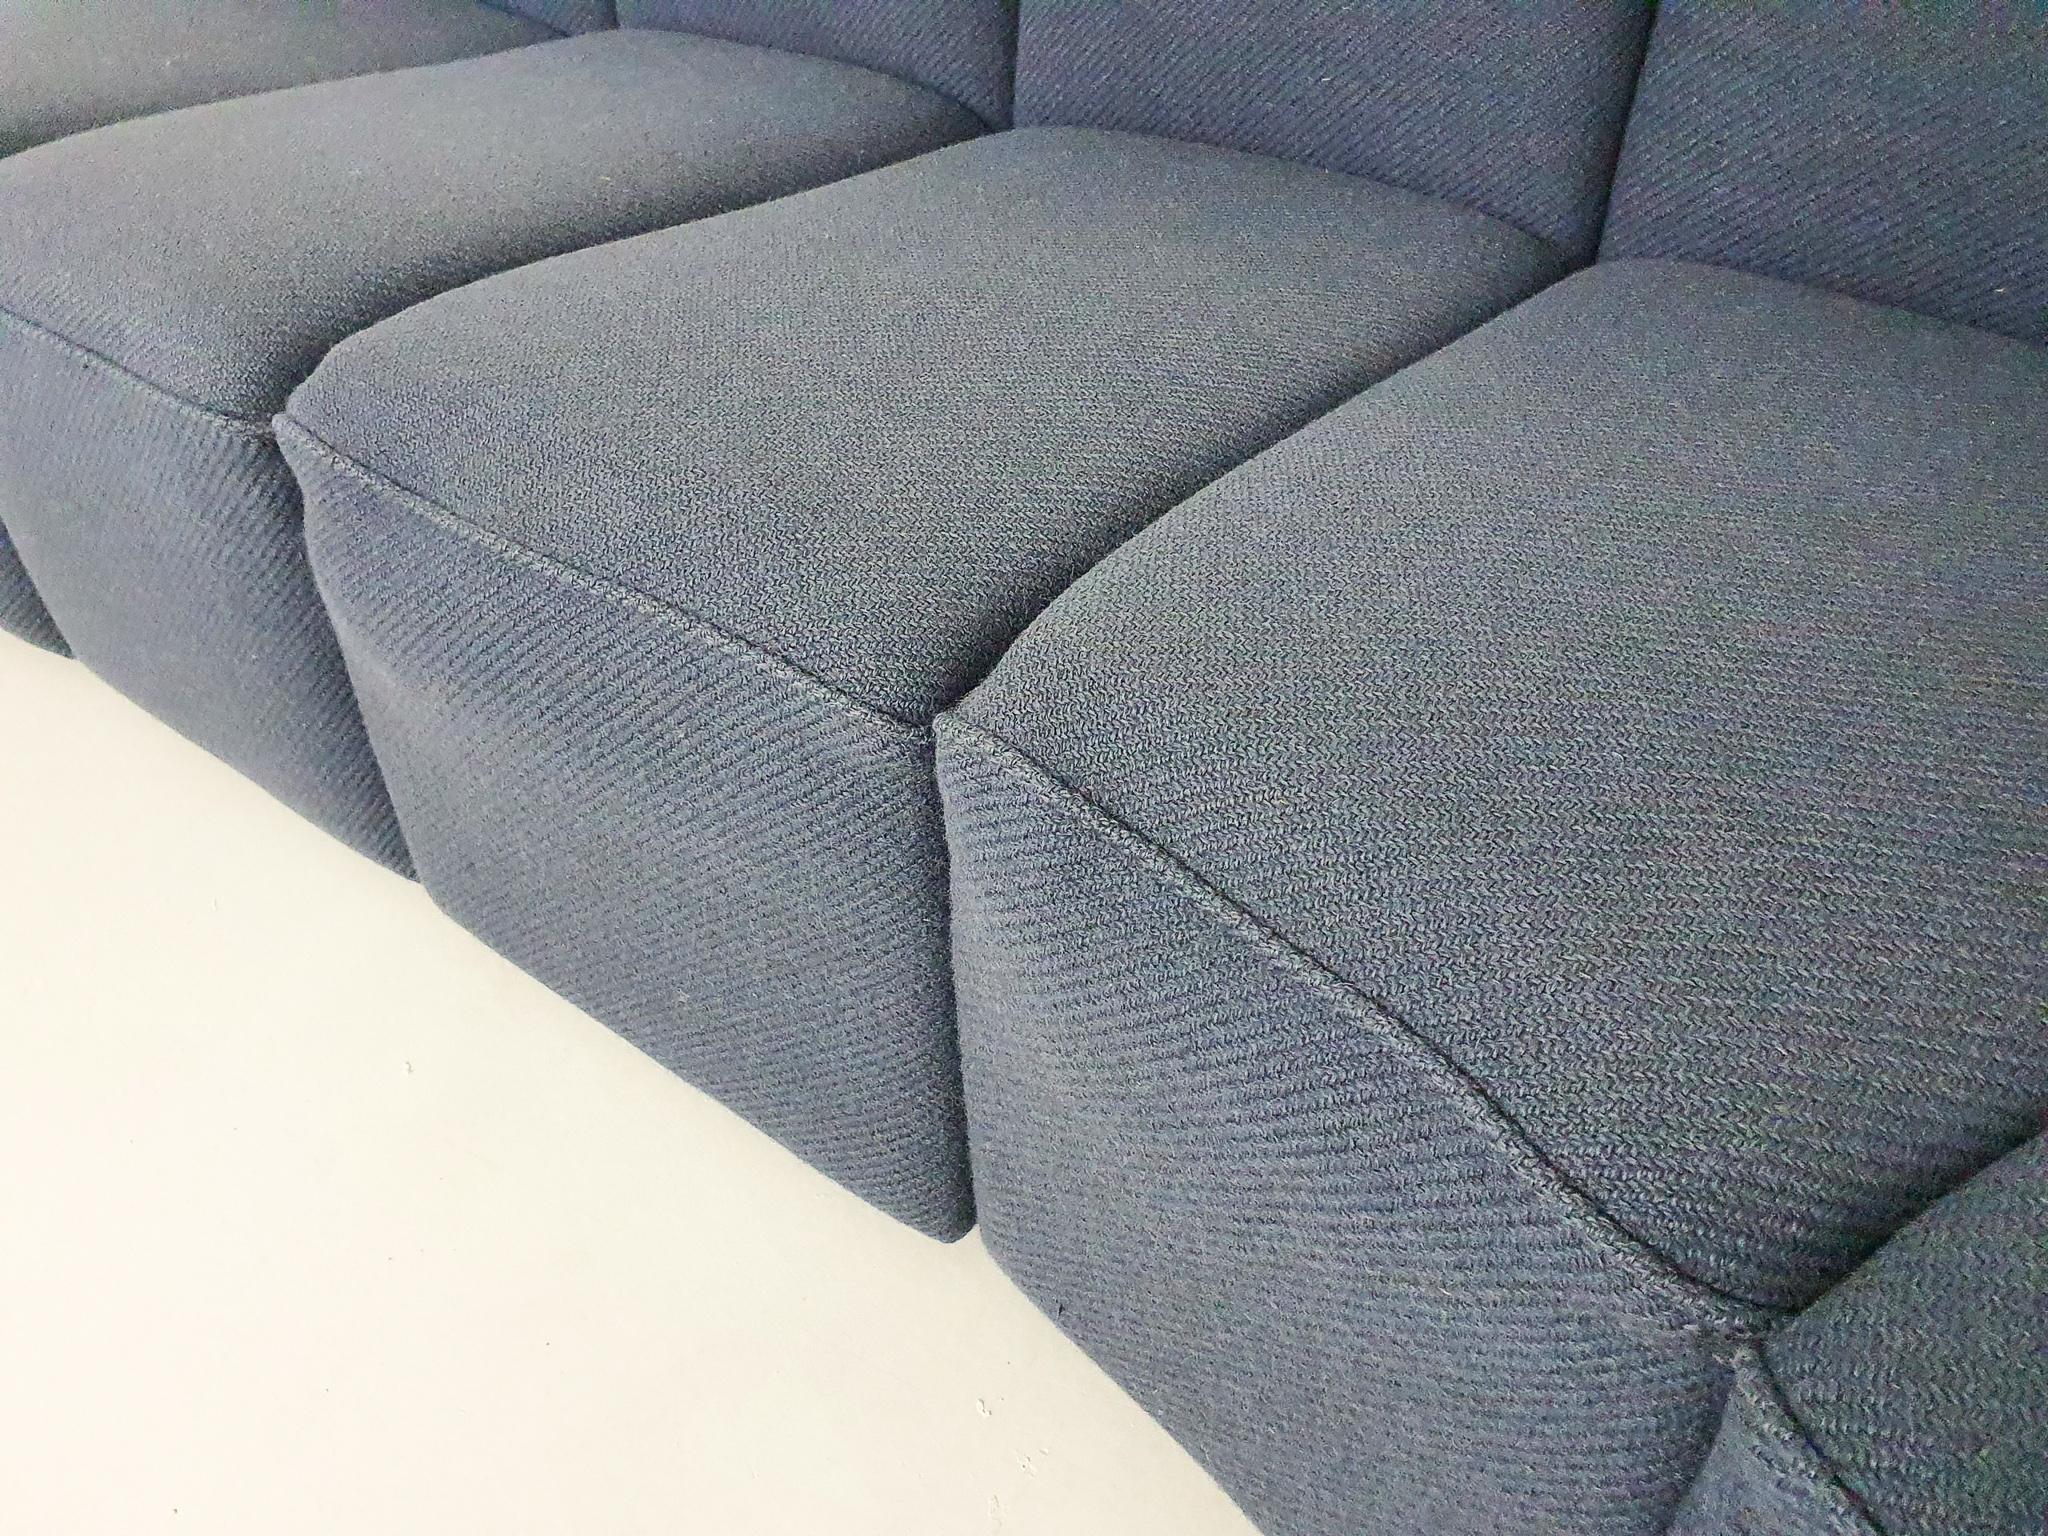 Customizable Modular Sofa Model 